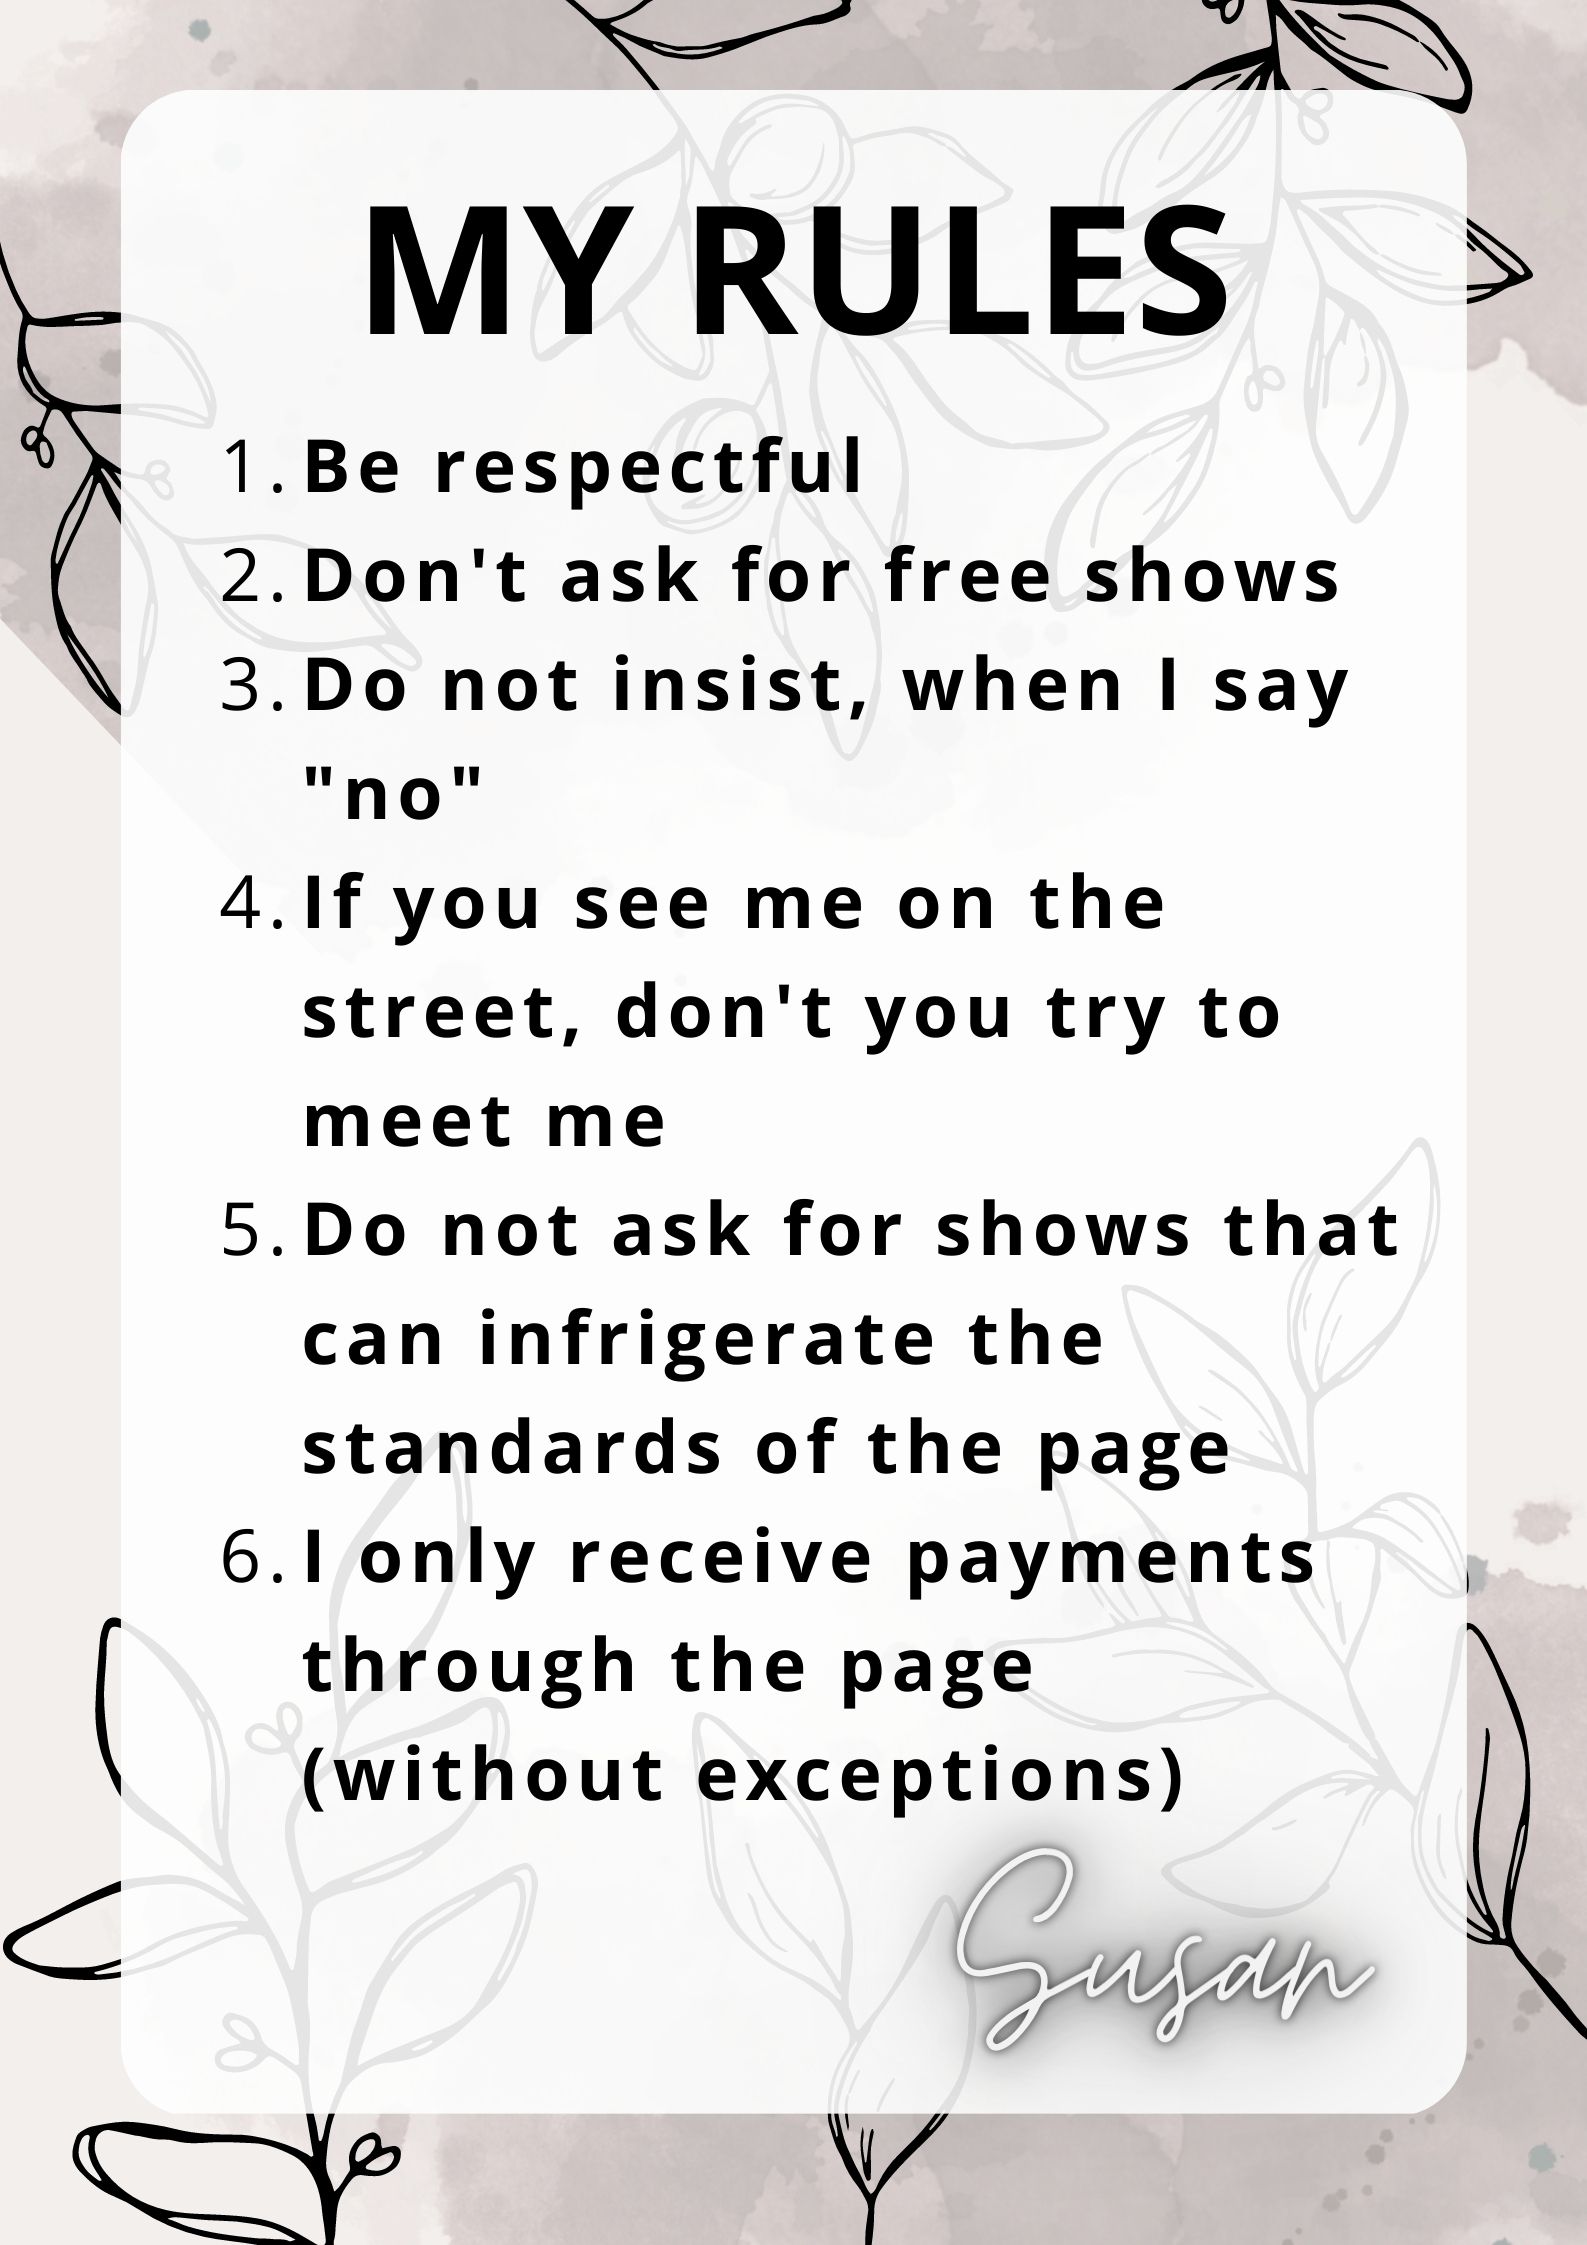 Susanmk My rules image: 1